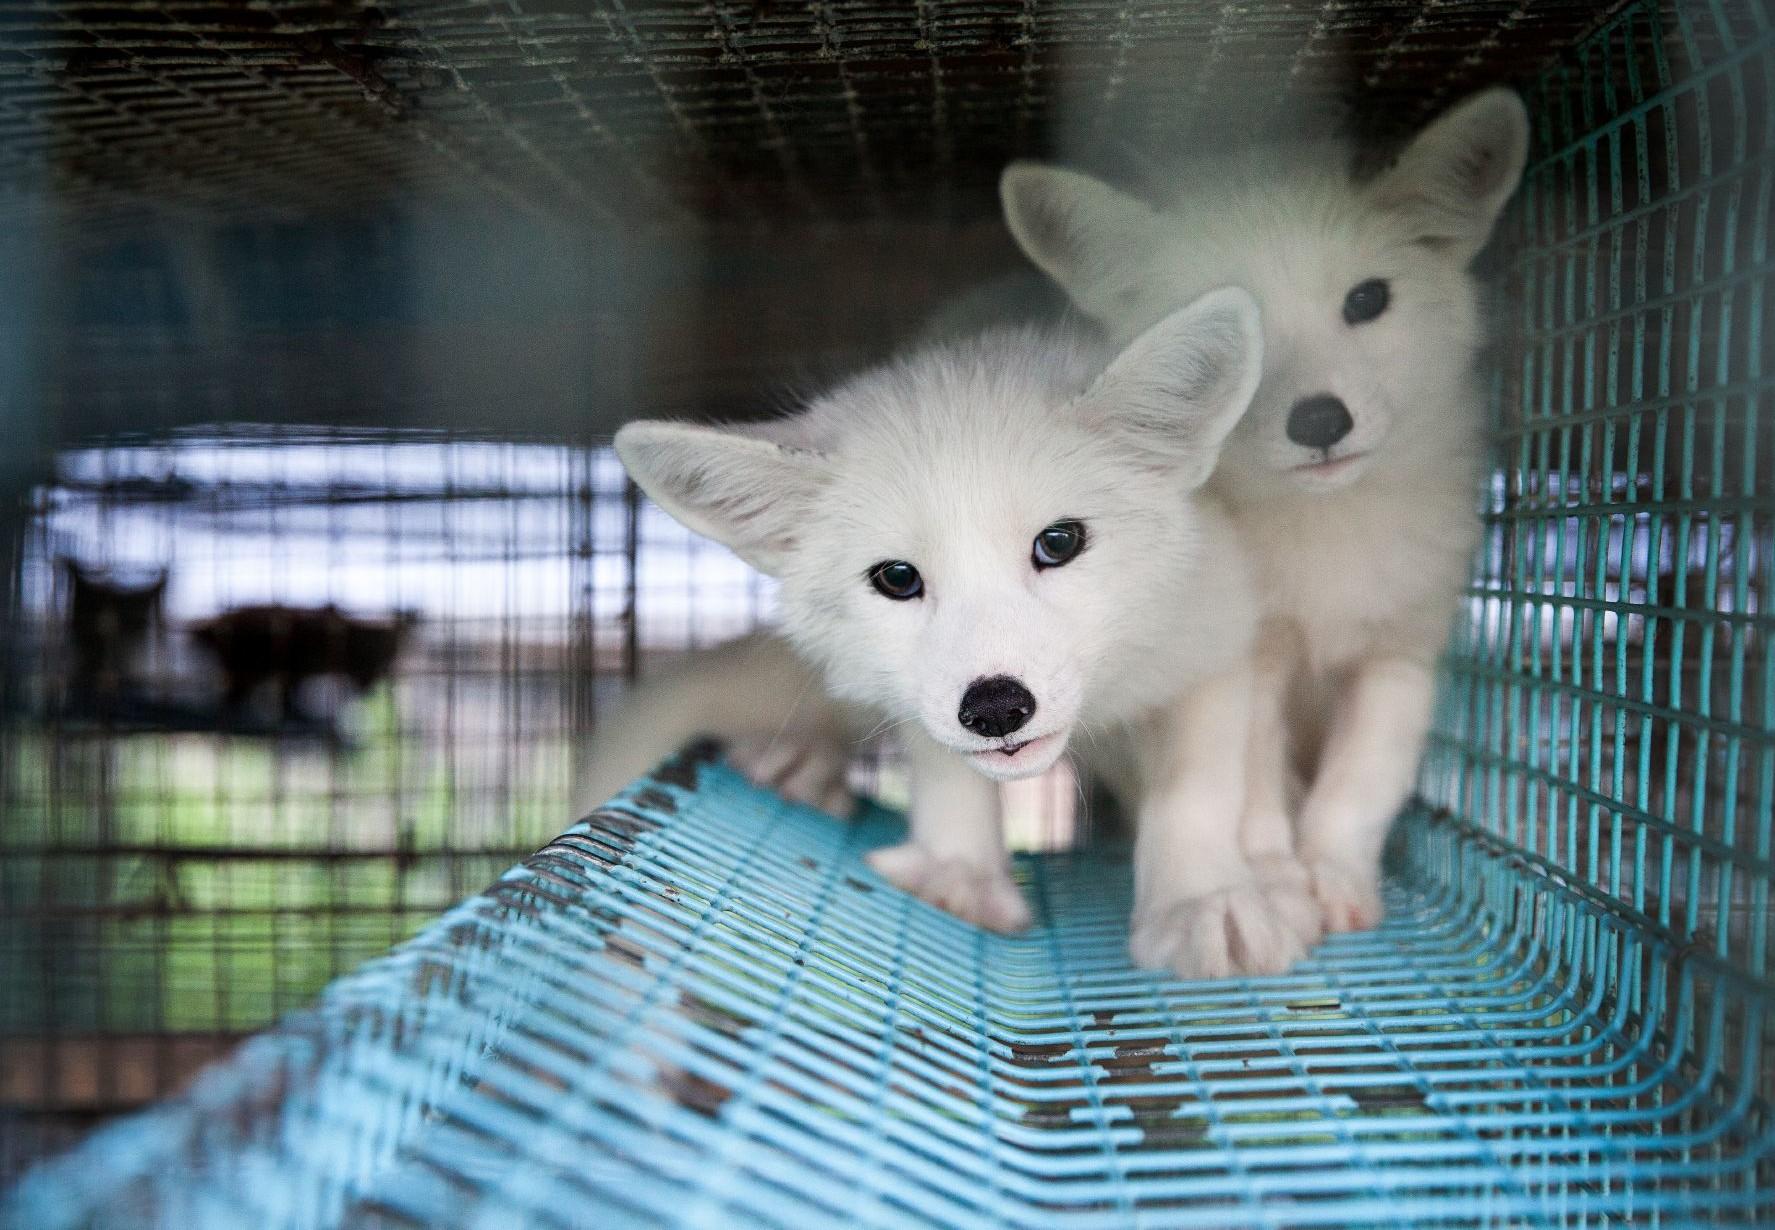 Animals used for fur - FOUR PAWS International - Animal Welfare Organisation